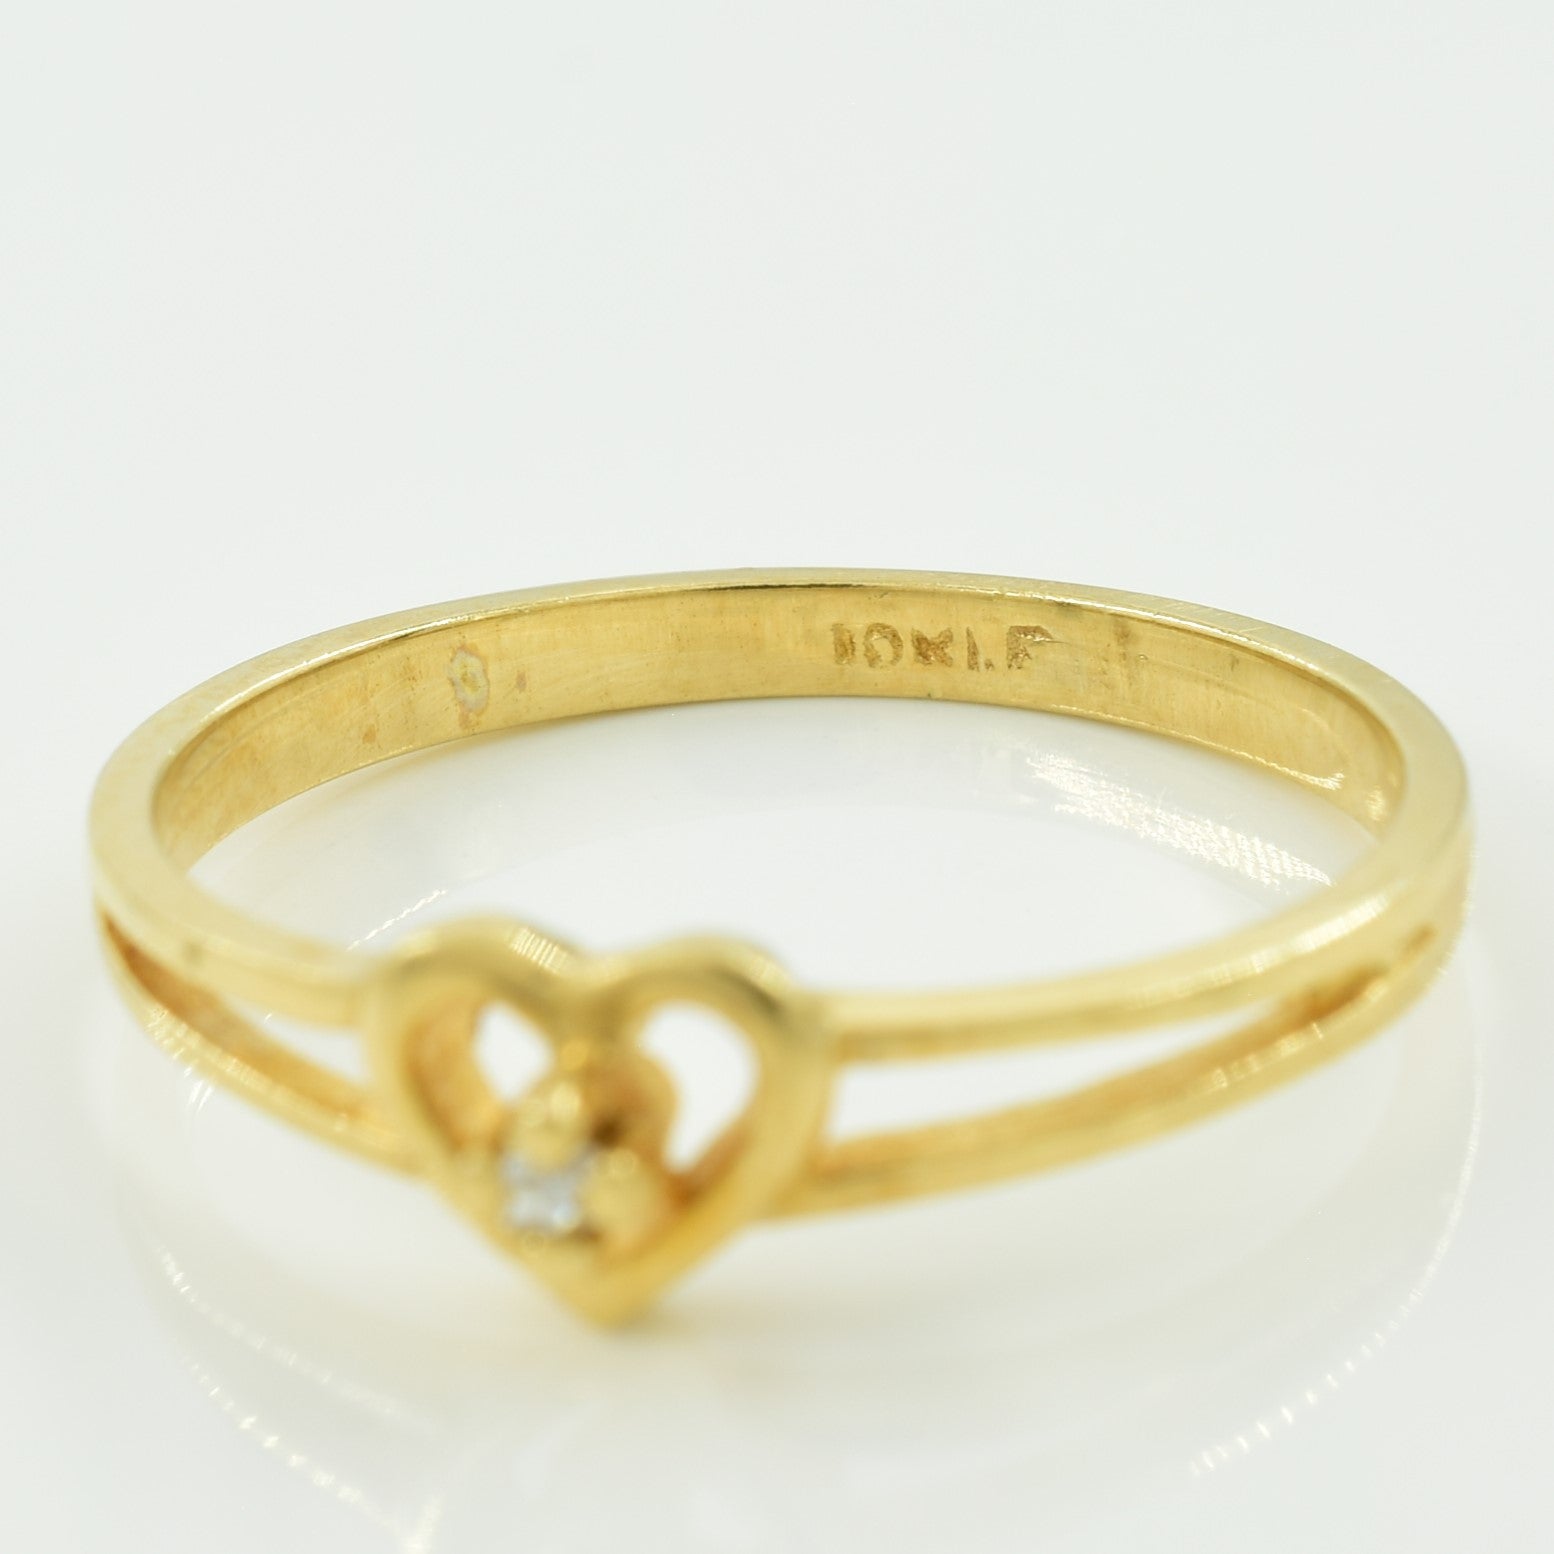 Single Stone Diamond Heart Ring | 0.01ct | SZ 5.25 |